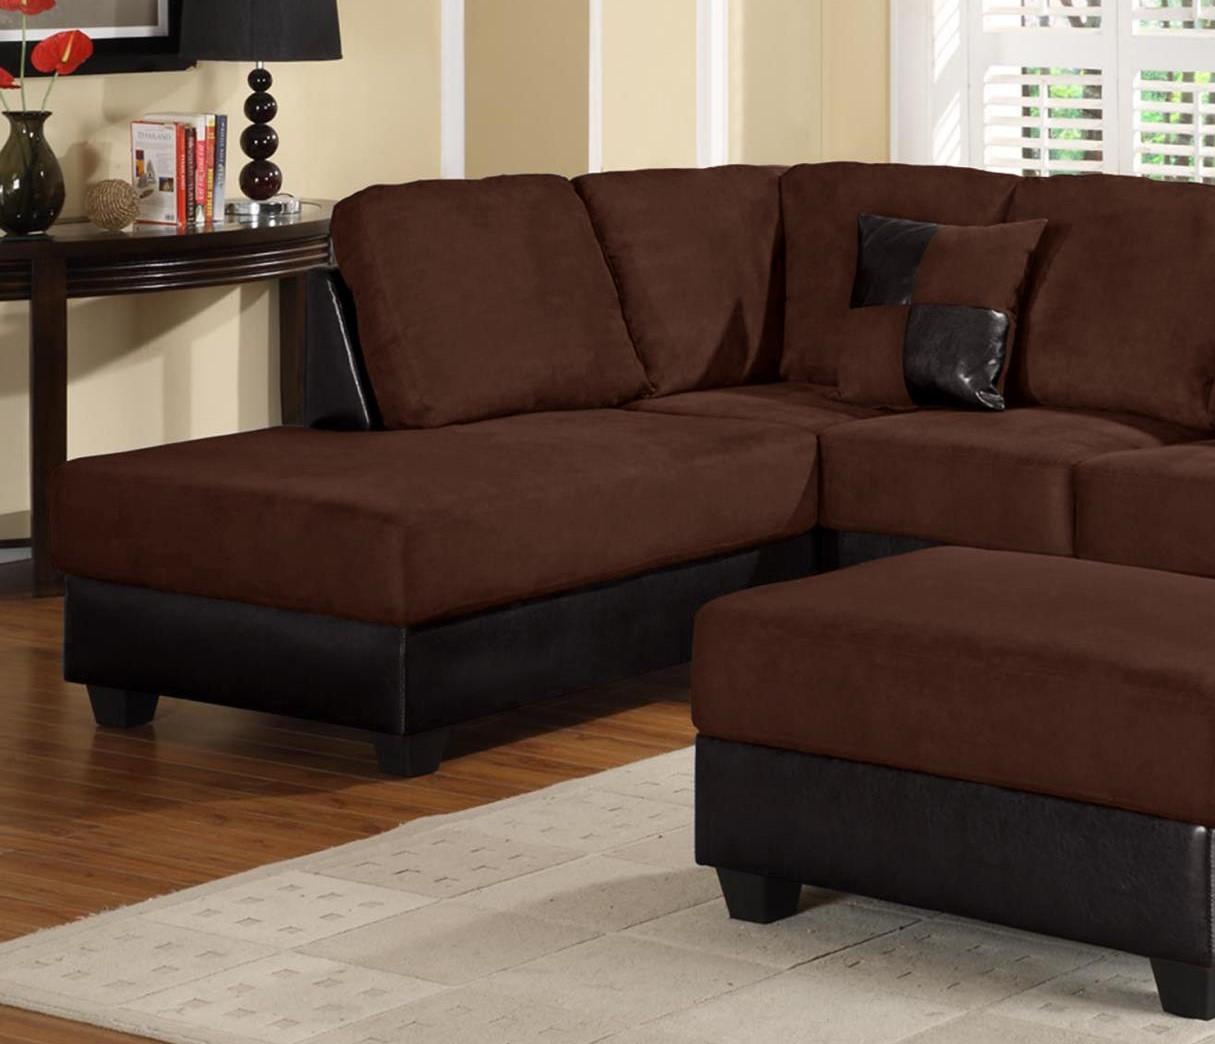 

    
MYCO Furniture Aniela Modern Chocolate Microfiber Upholstery Sectional w/Storage Ottoman
